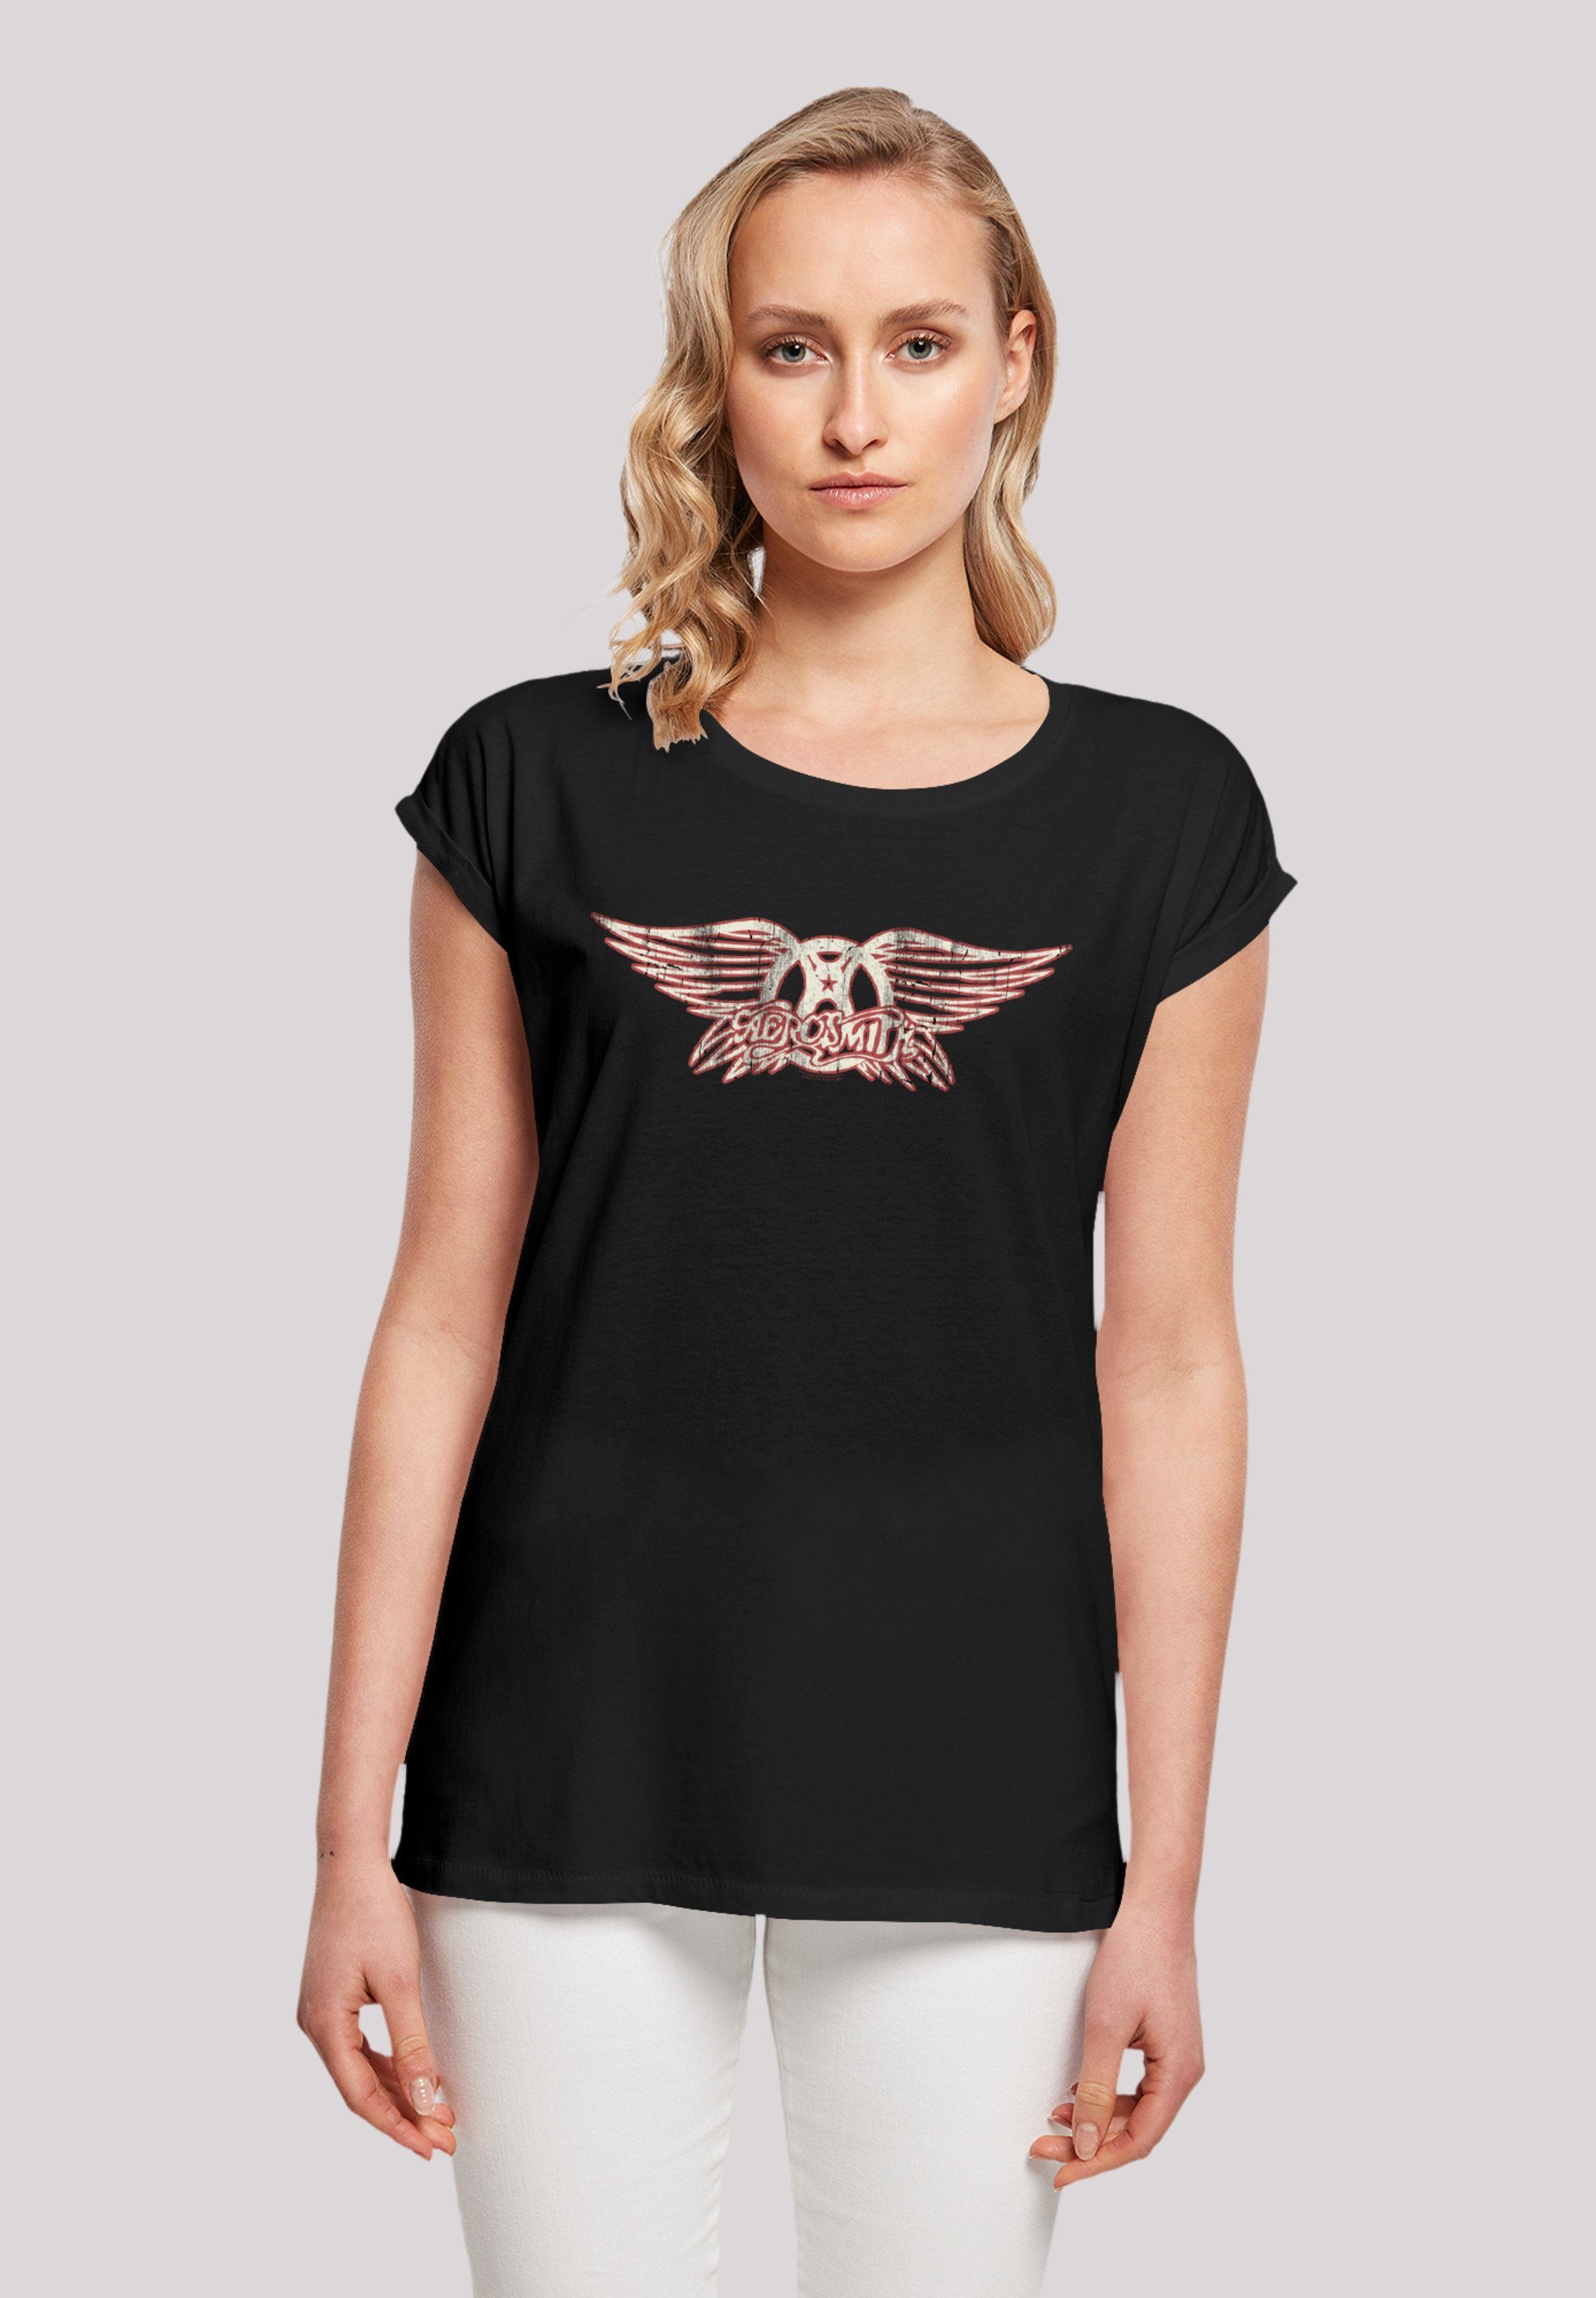 F4NT4STIC T-Shirt Logo Band Band Aerosmith Premium Rock-Musik, Rock Qualität